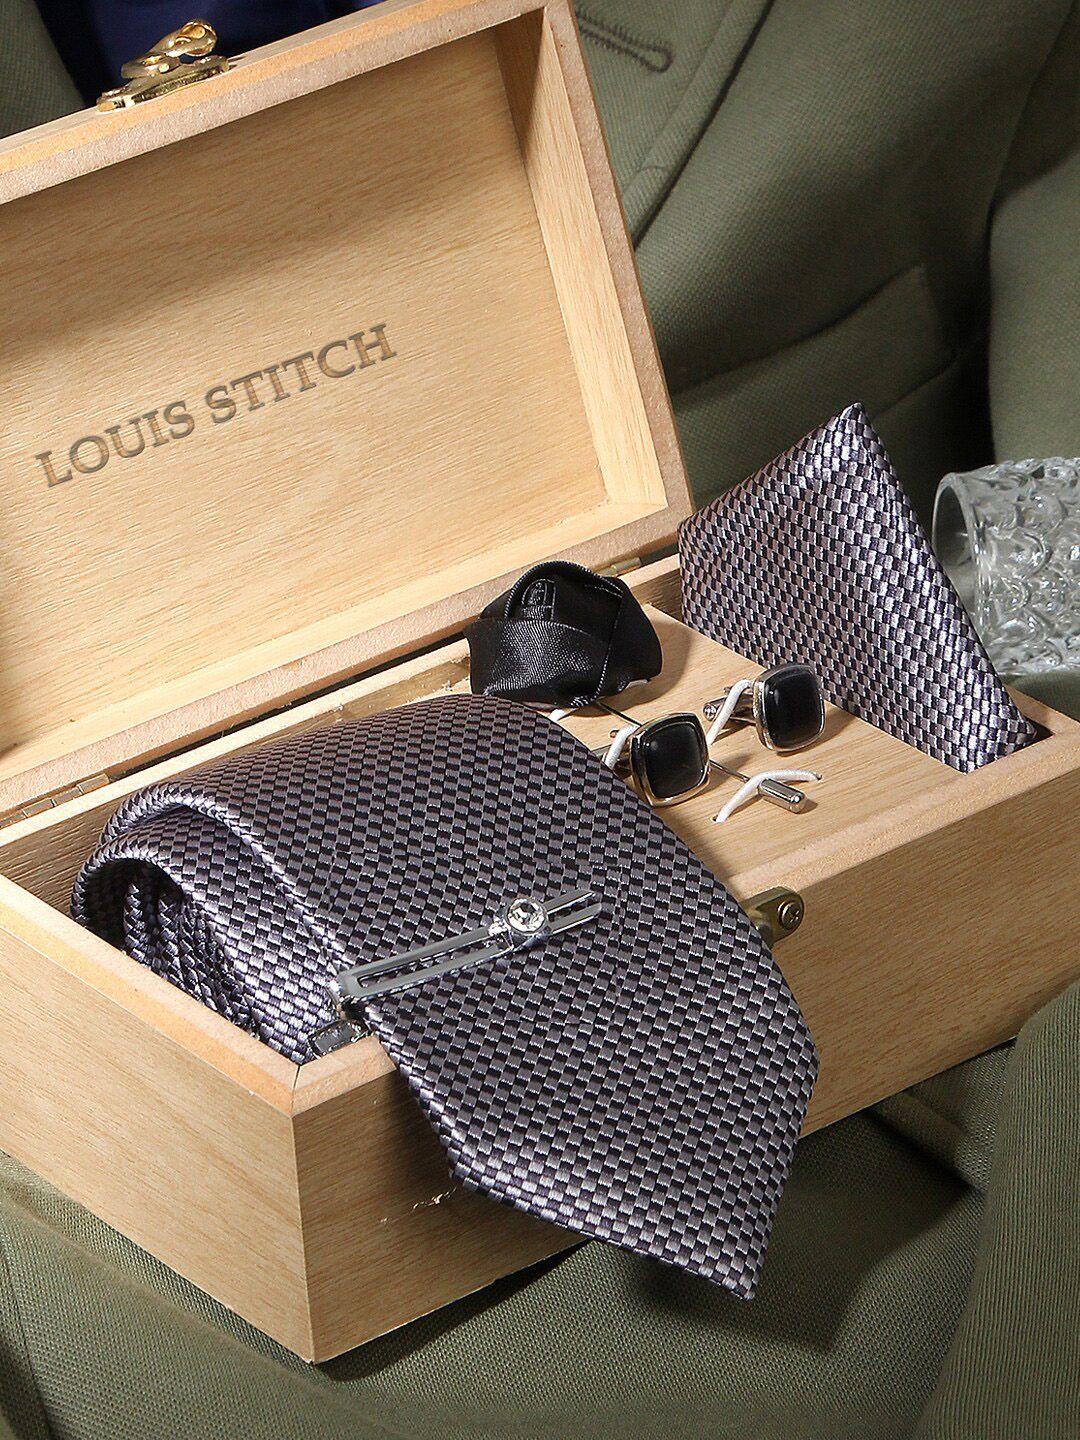 louis stitch men grey & white silk accessory gift set